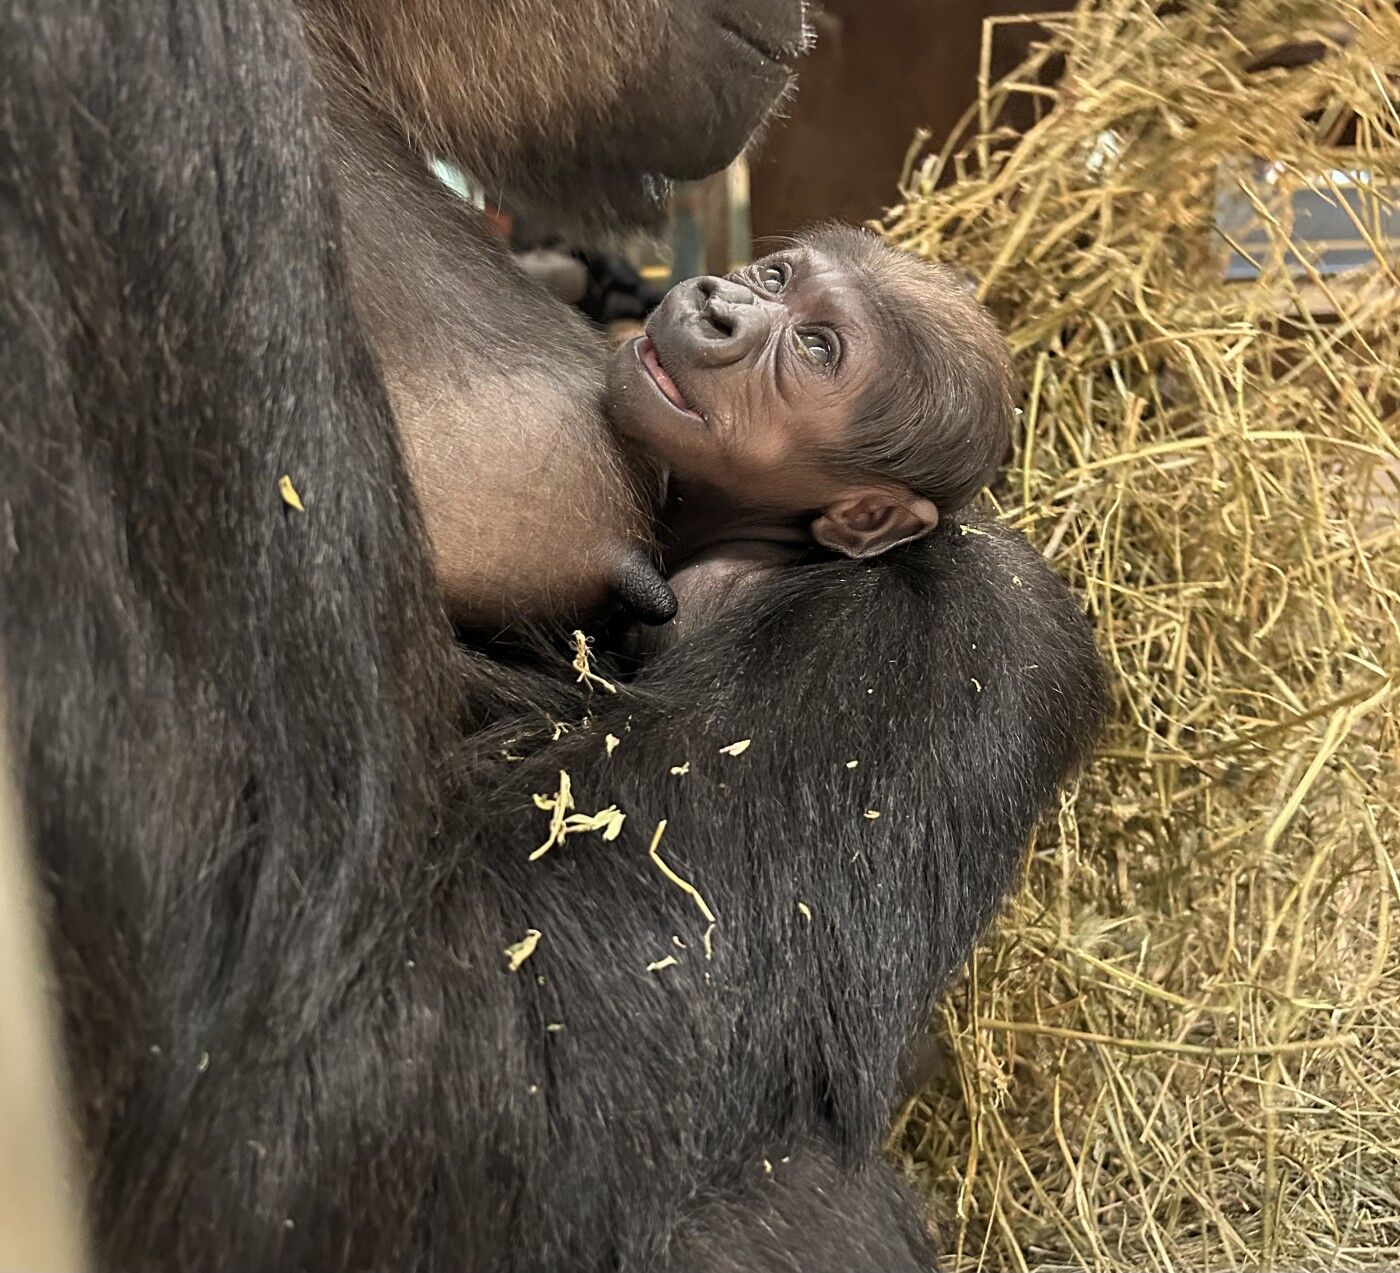 Baby gorilla looking up to mother gorilla.